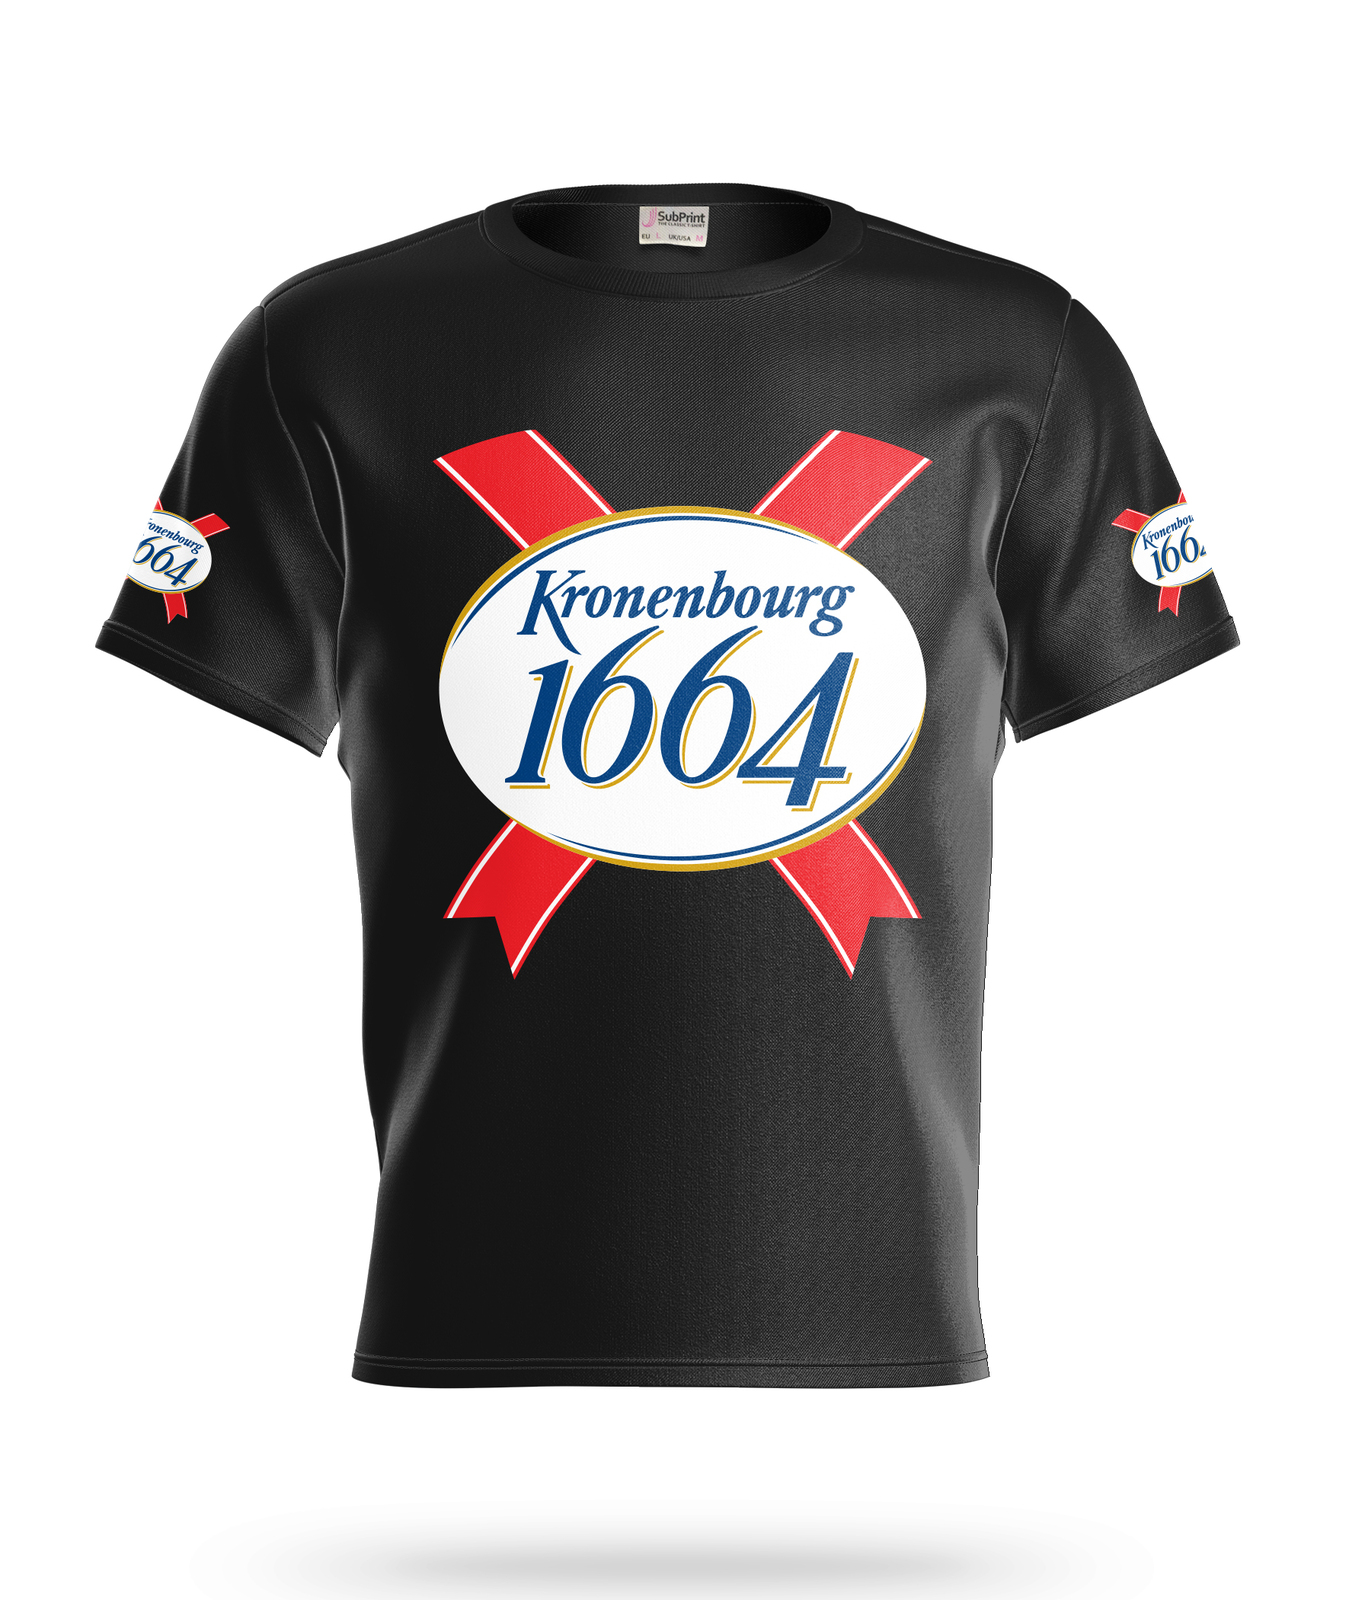 Kronenbourg_1664  Beer Logo Black Short Sleeve  T-Shirt Gift New Fashion